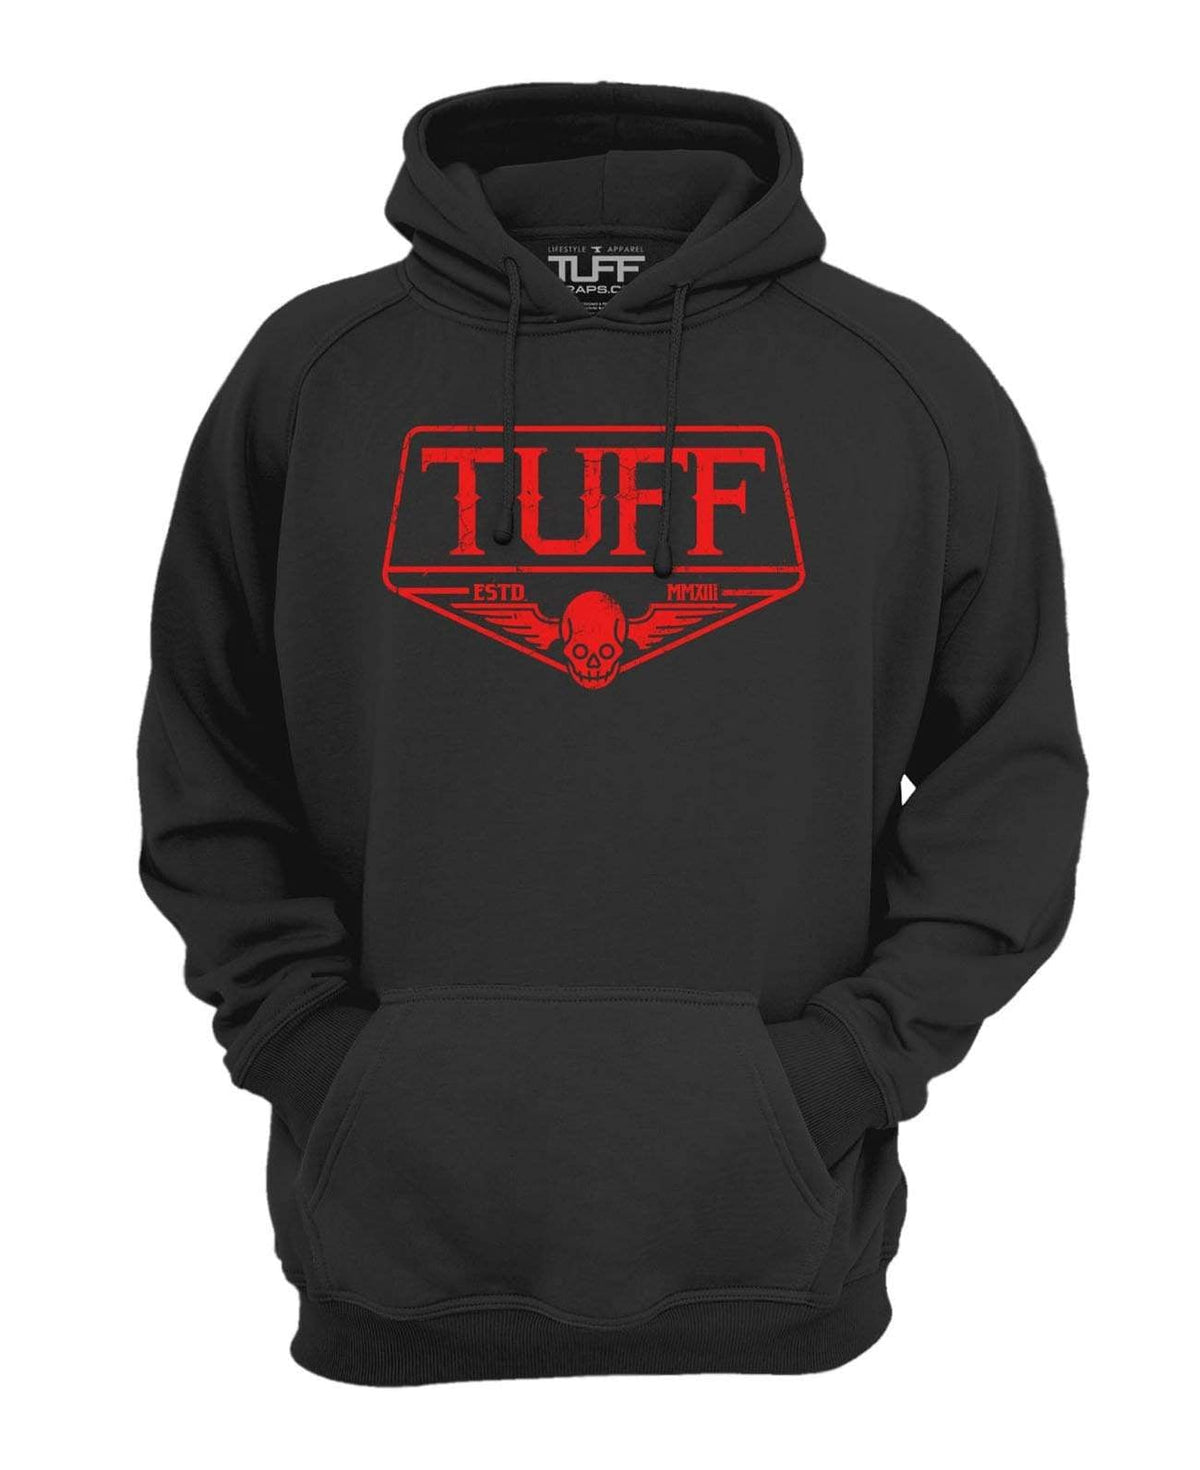 TUFF Skull Wings Hooded Sweatshirt XS / Black with Red TuffWraps.com